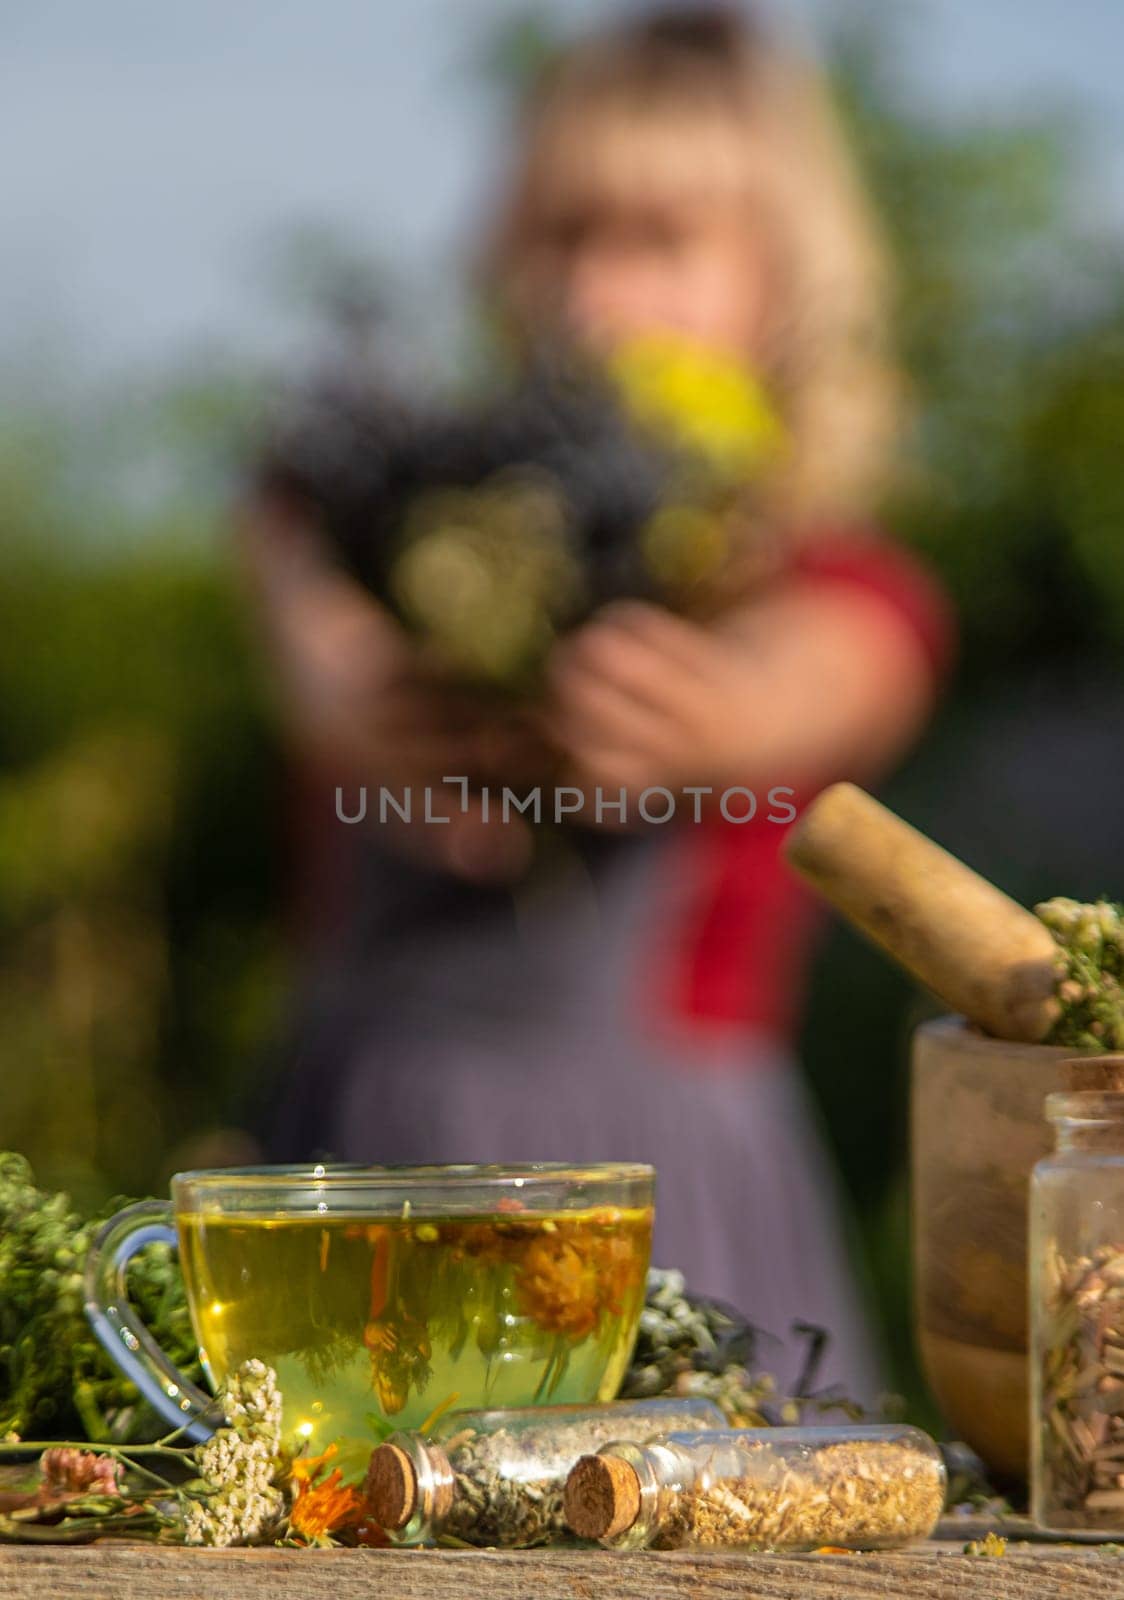 A woman brews herbal tea. Selective focus. by yanadjana